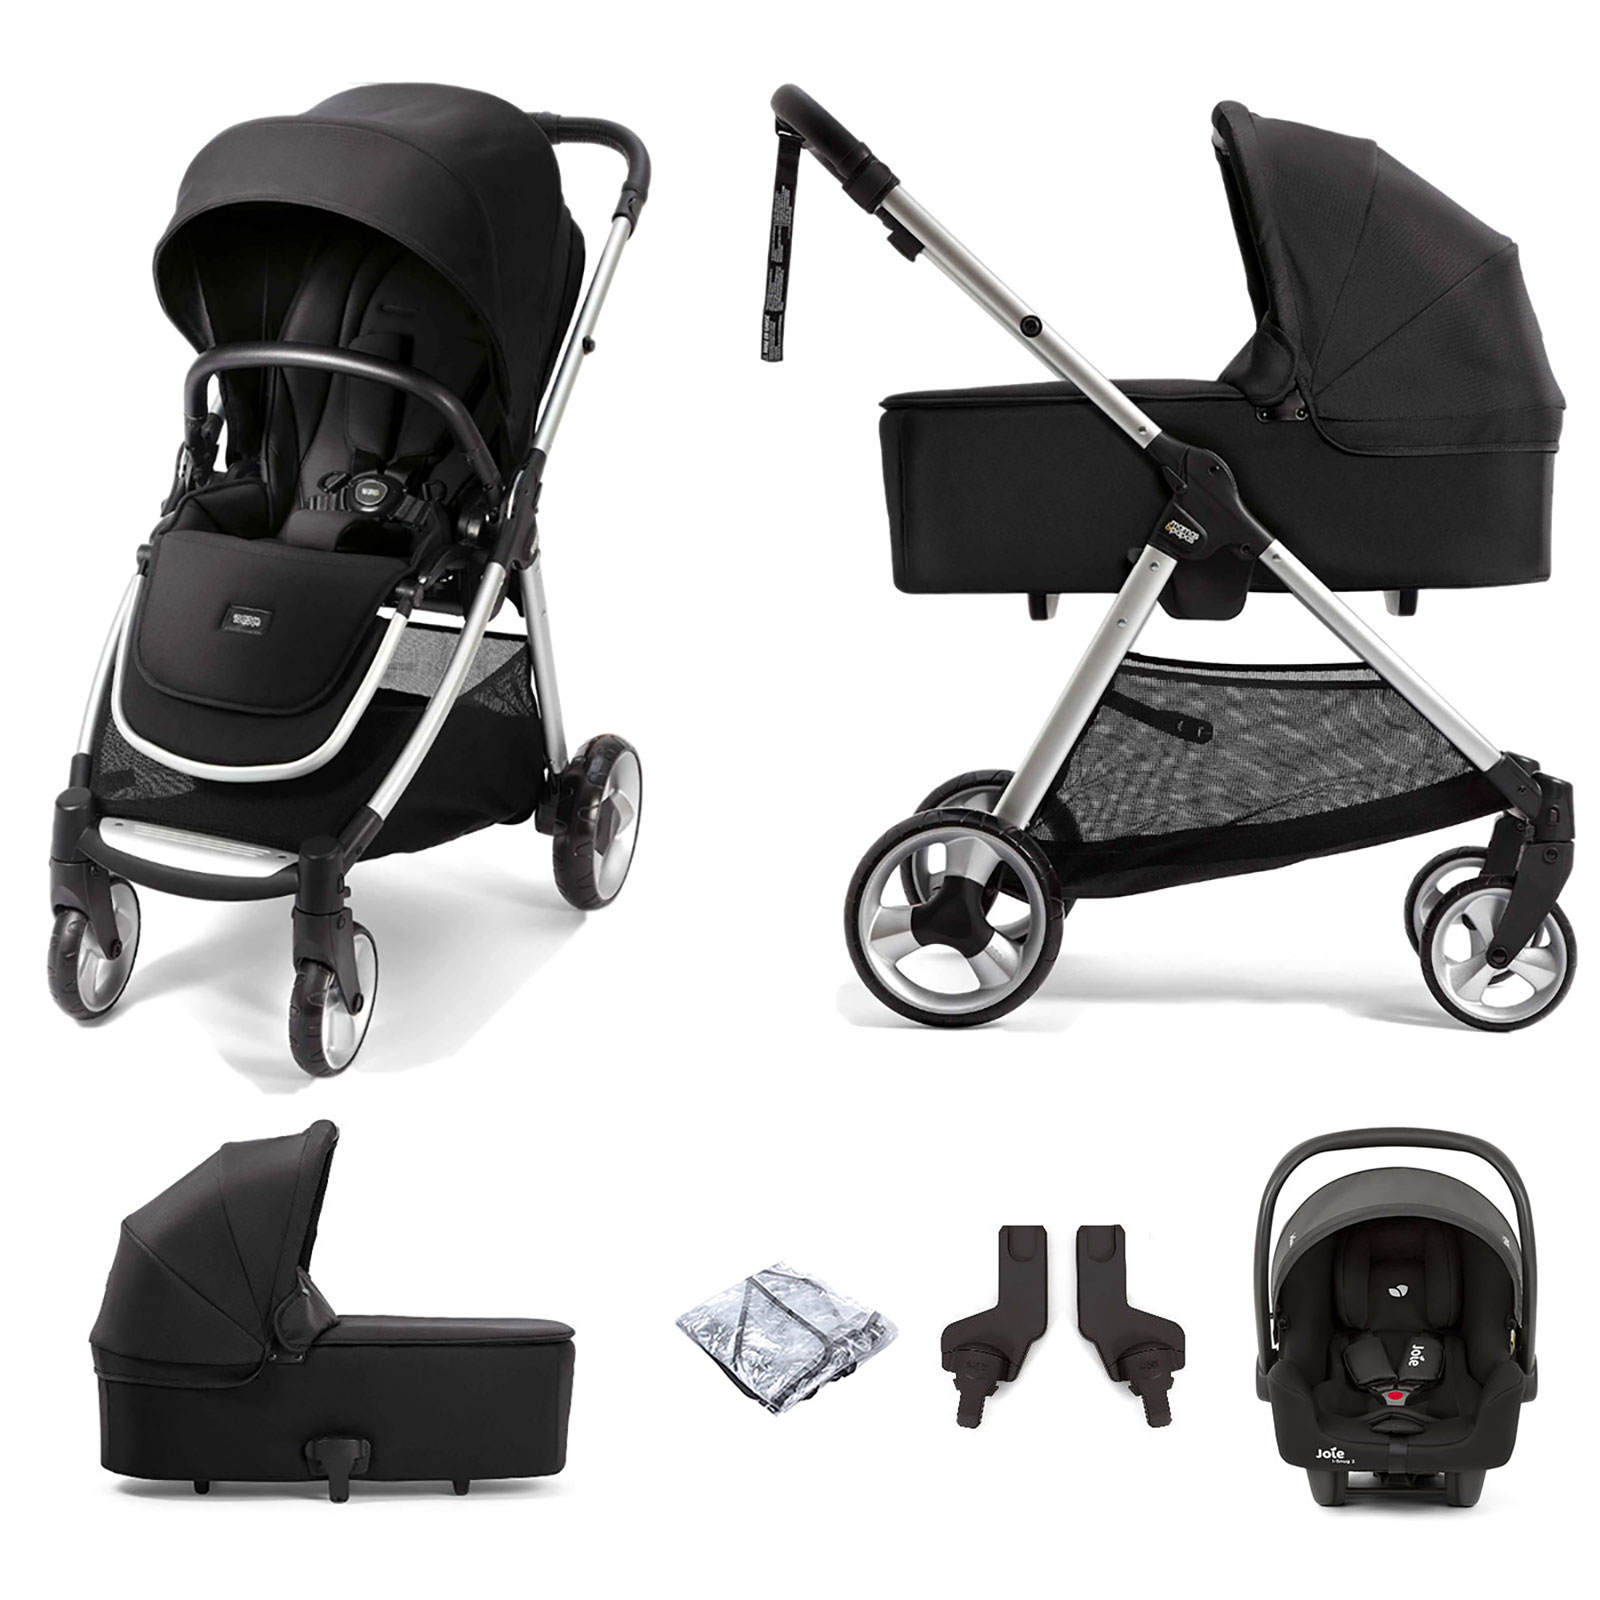 Mamas & Papas Flip XT2 (i-Snug 2 Car Seat) Travel System with Carrycot - Black